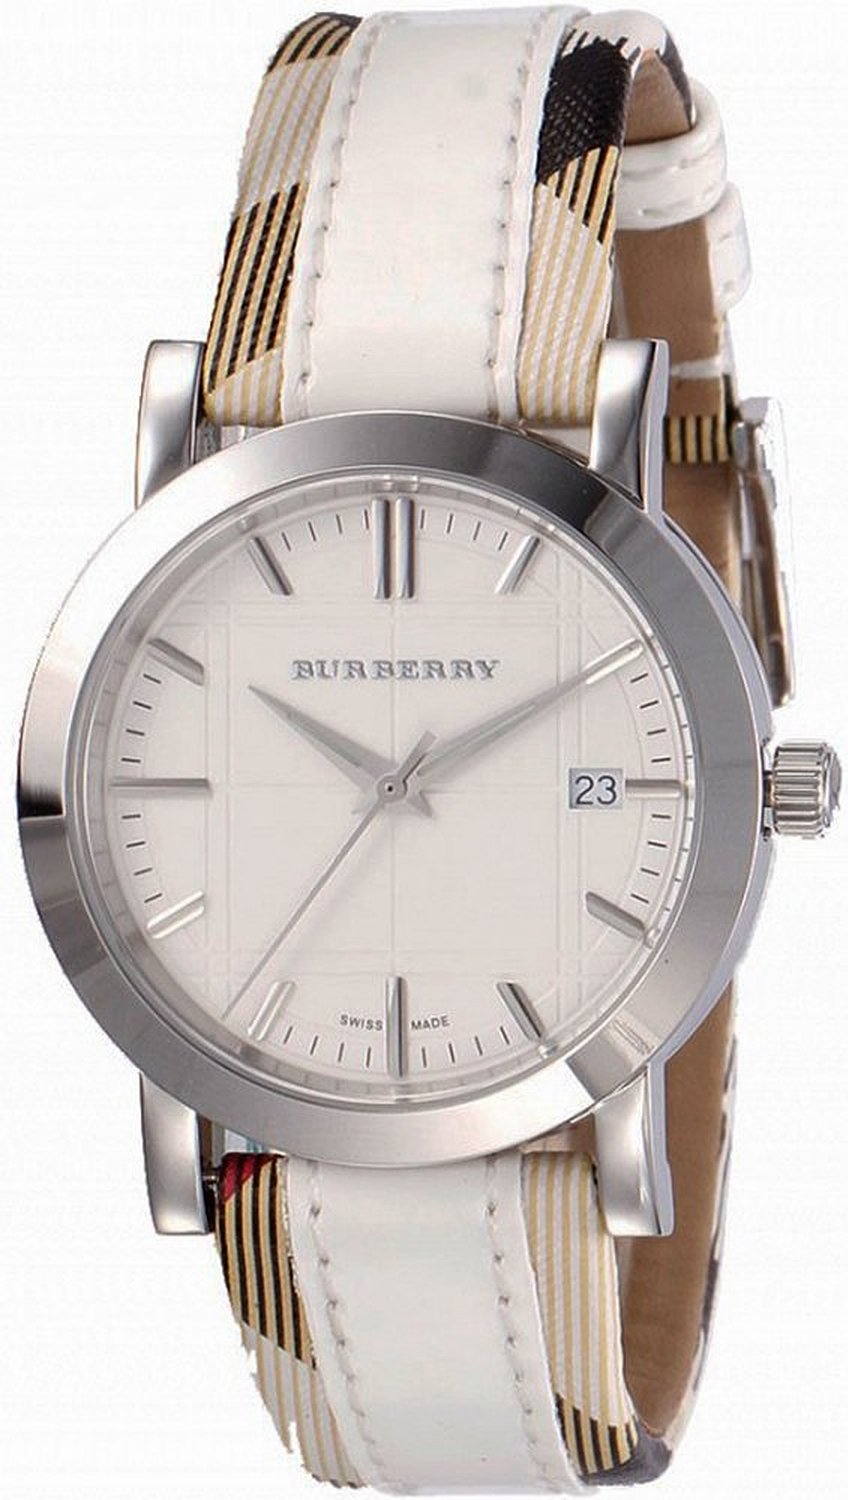 burberry white watch ladies